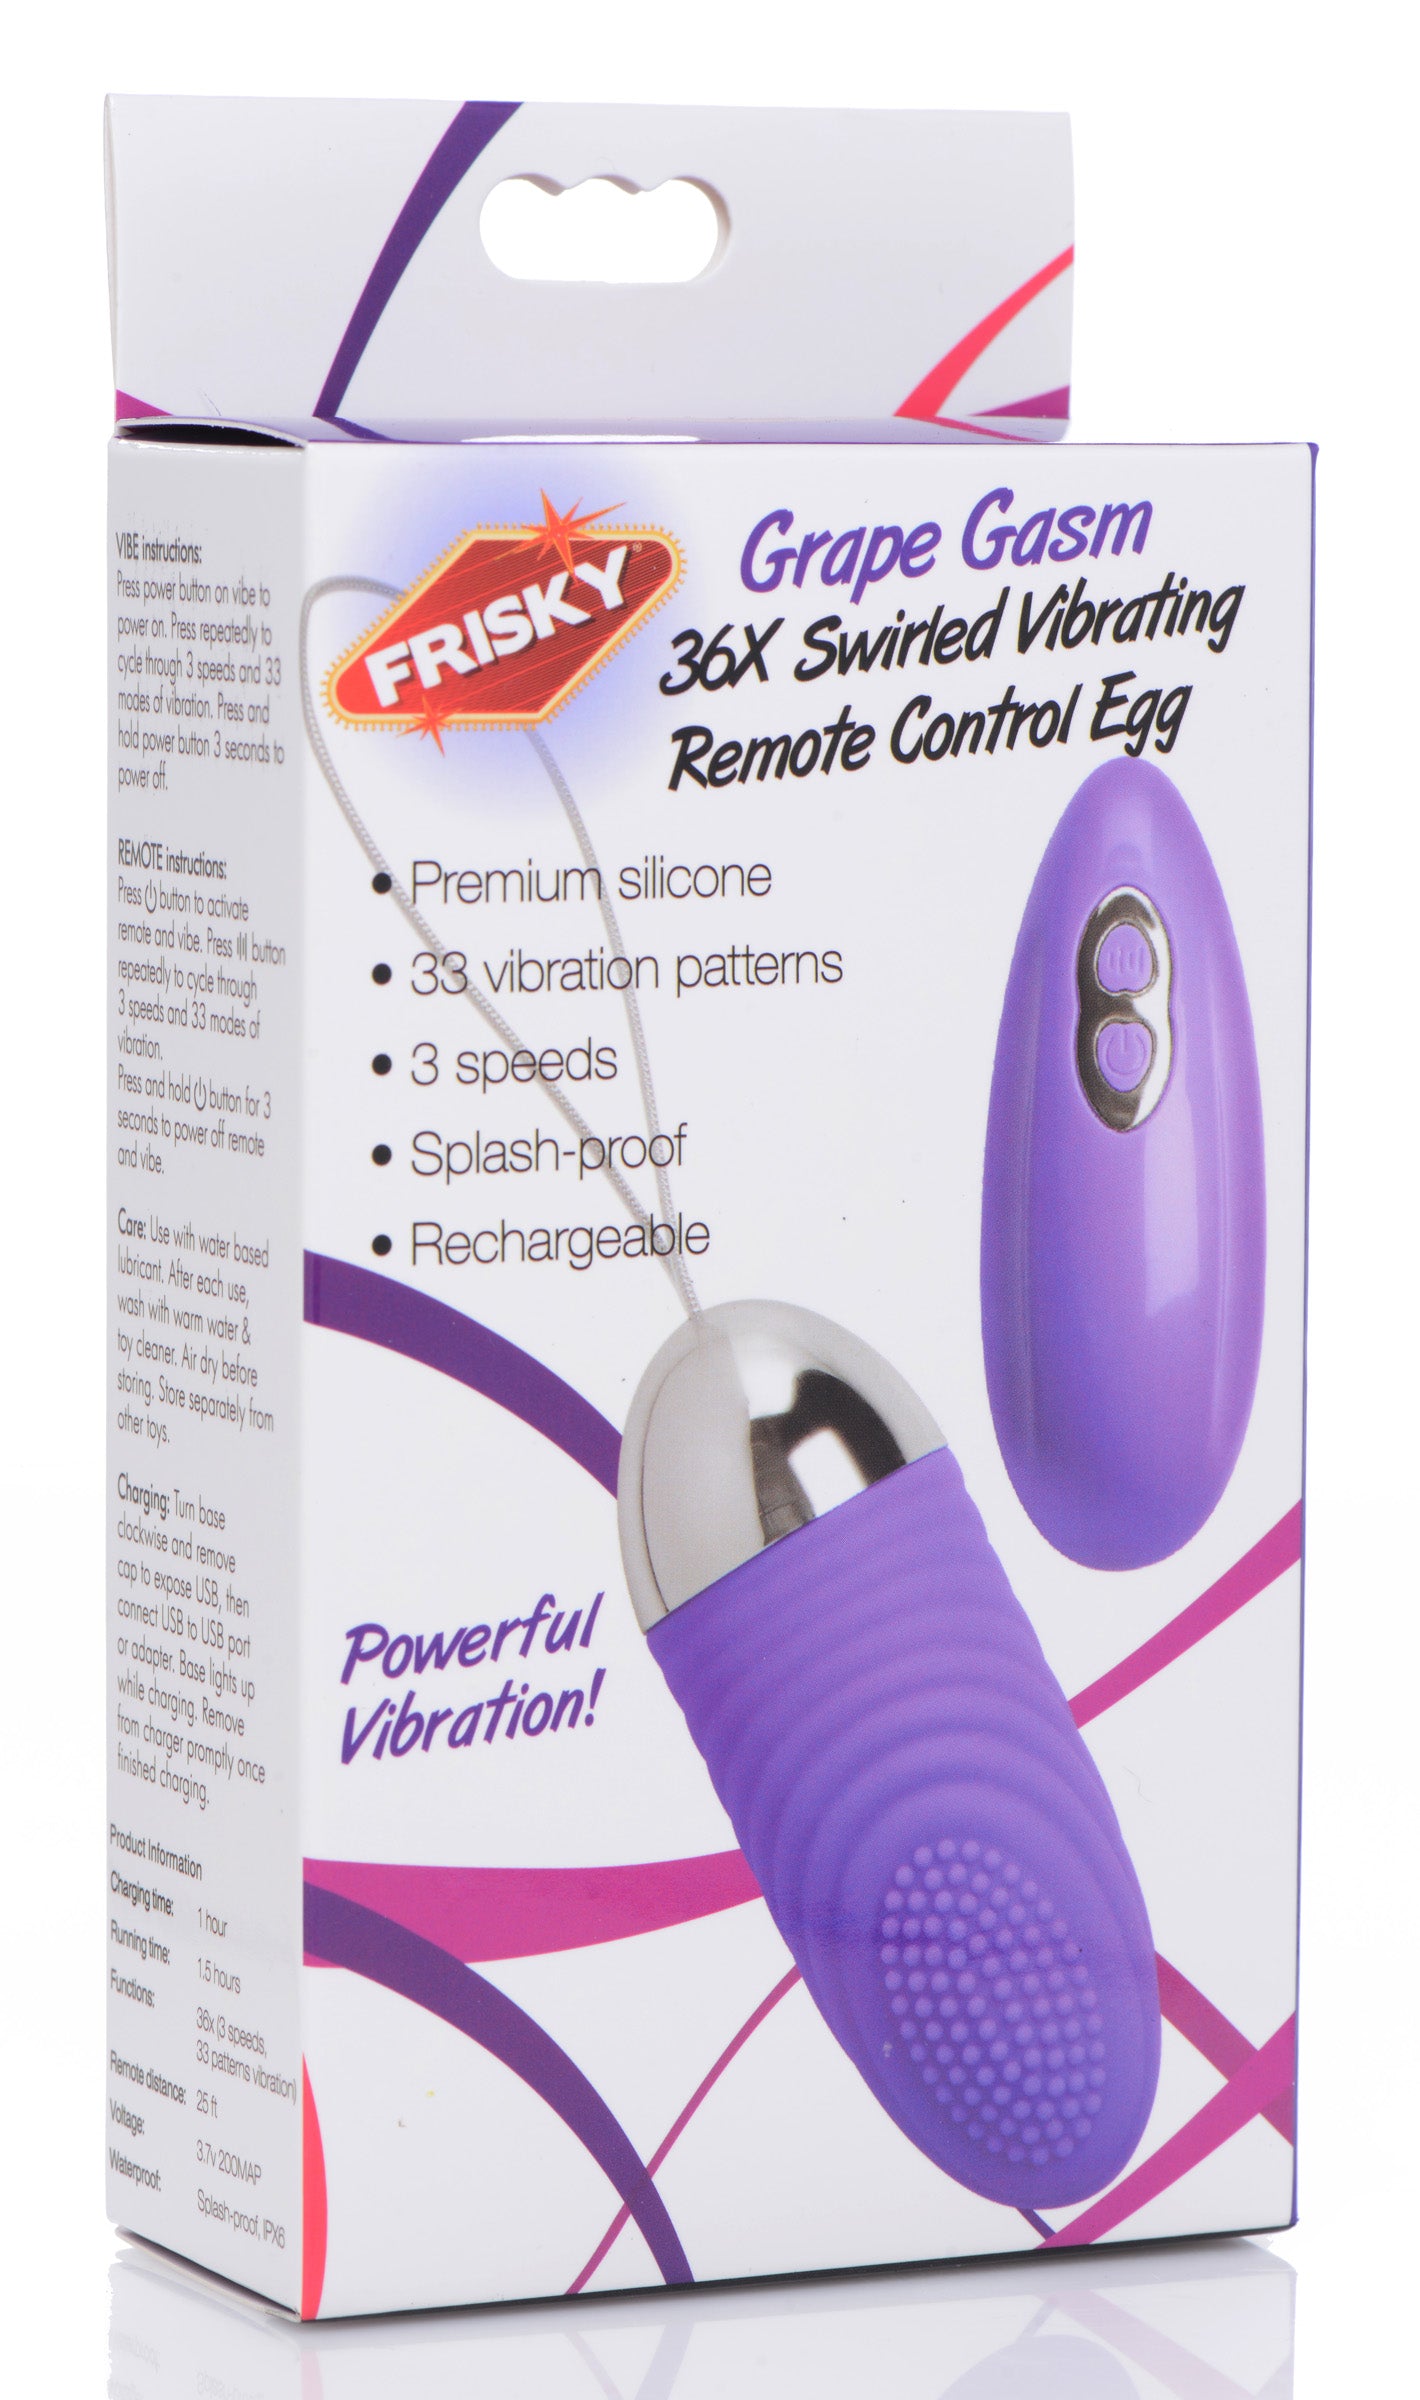 Grape Gasm 36X Swirled Vibrating Remote Control Egg - UABDSM